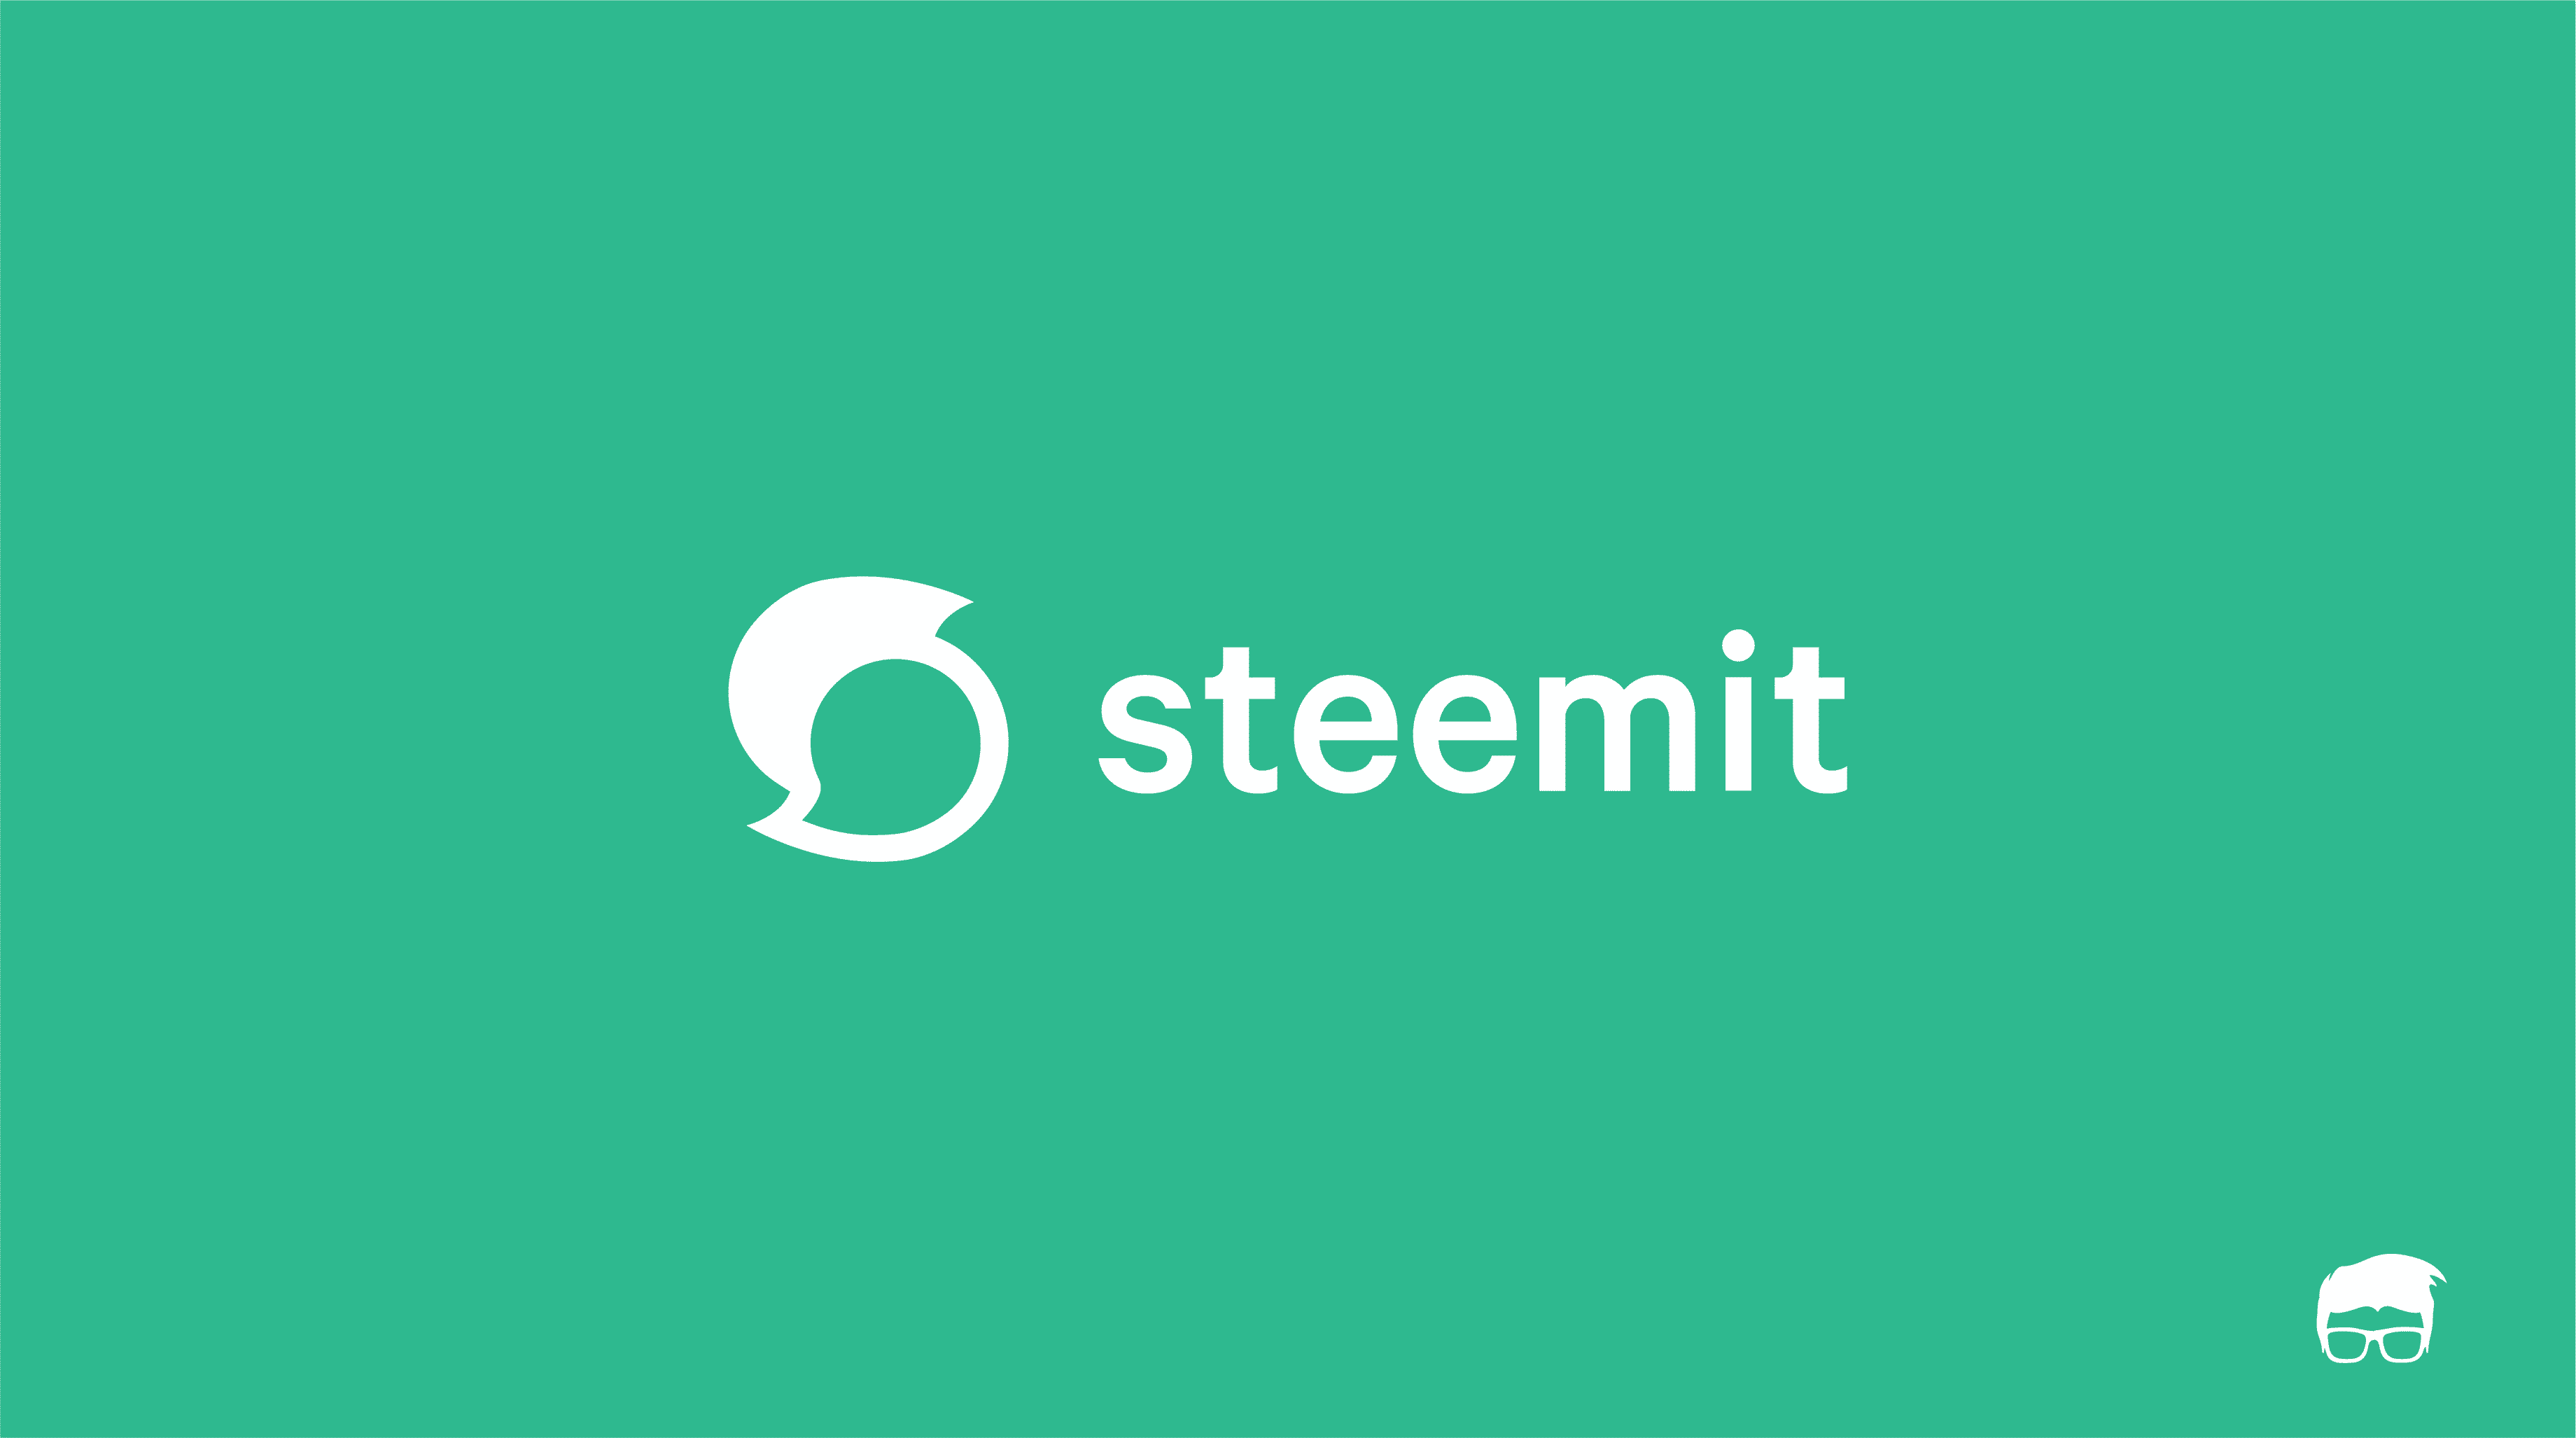 Steemit Business model | How Does Steemit Make Money?